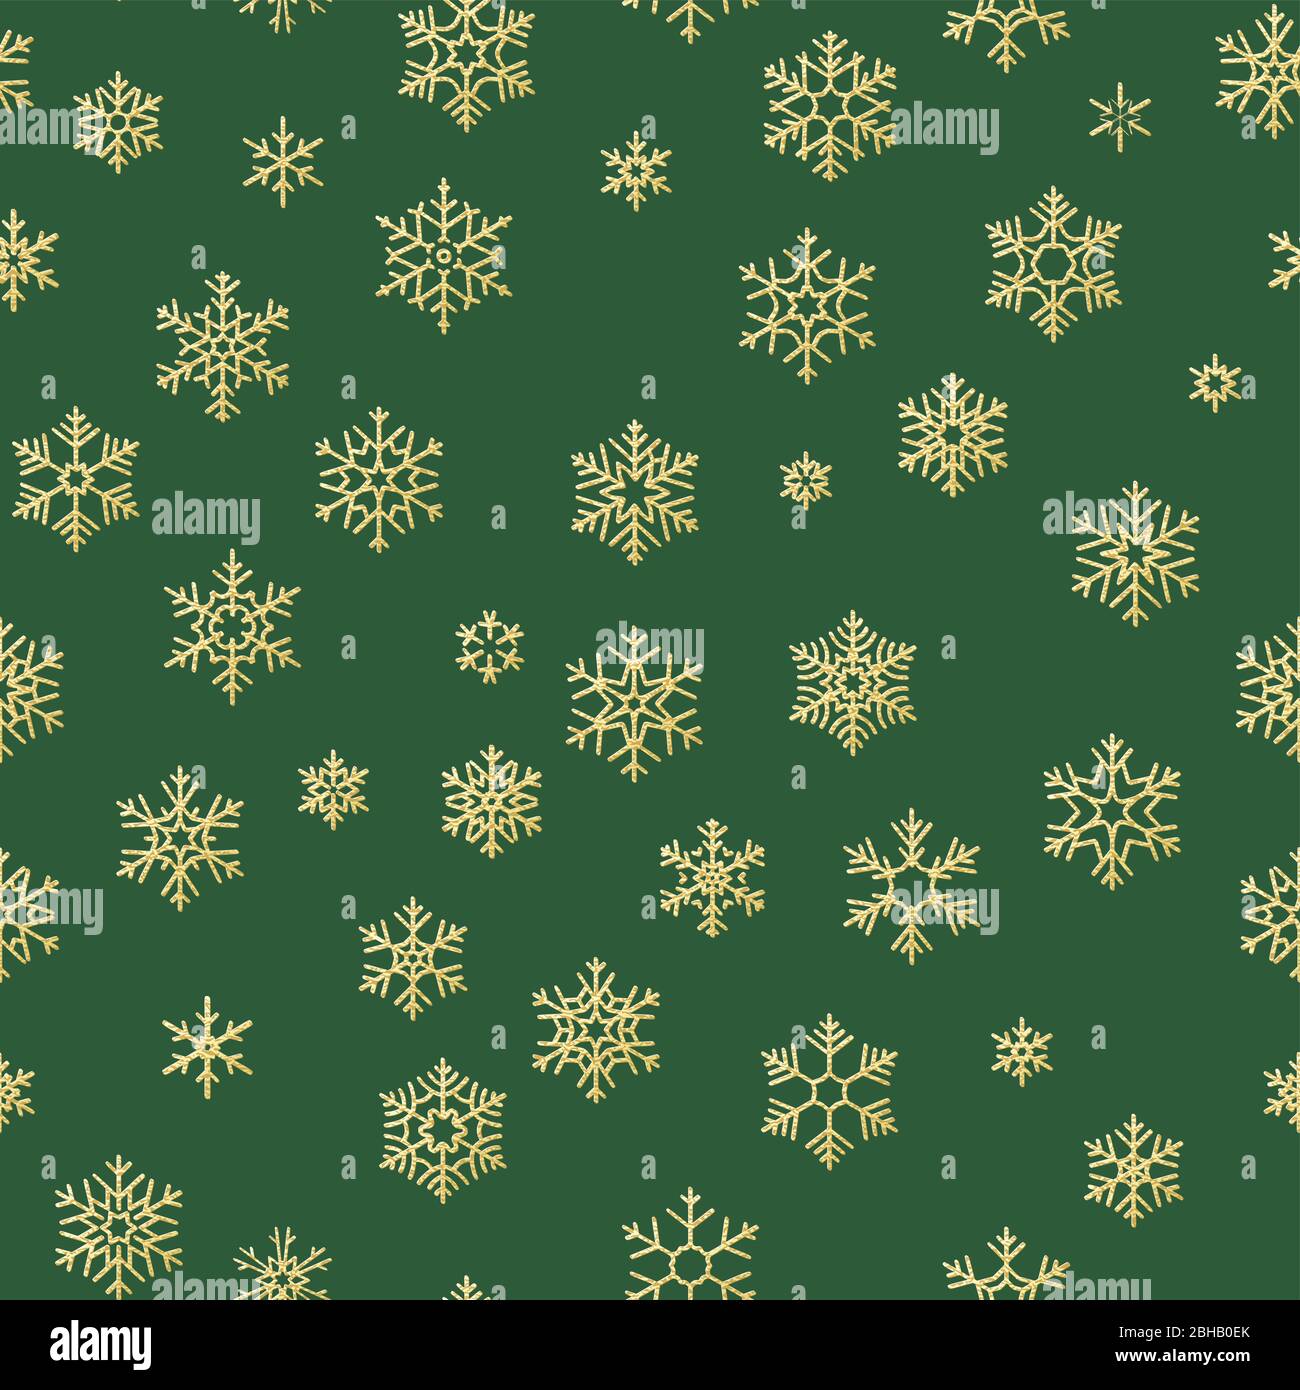 Green Christmas Background Images  Free Download on Freepik